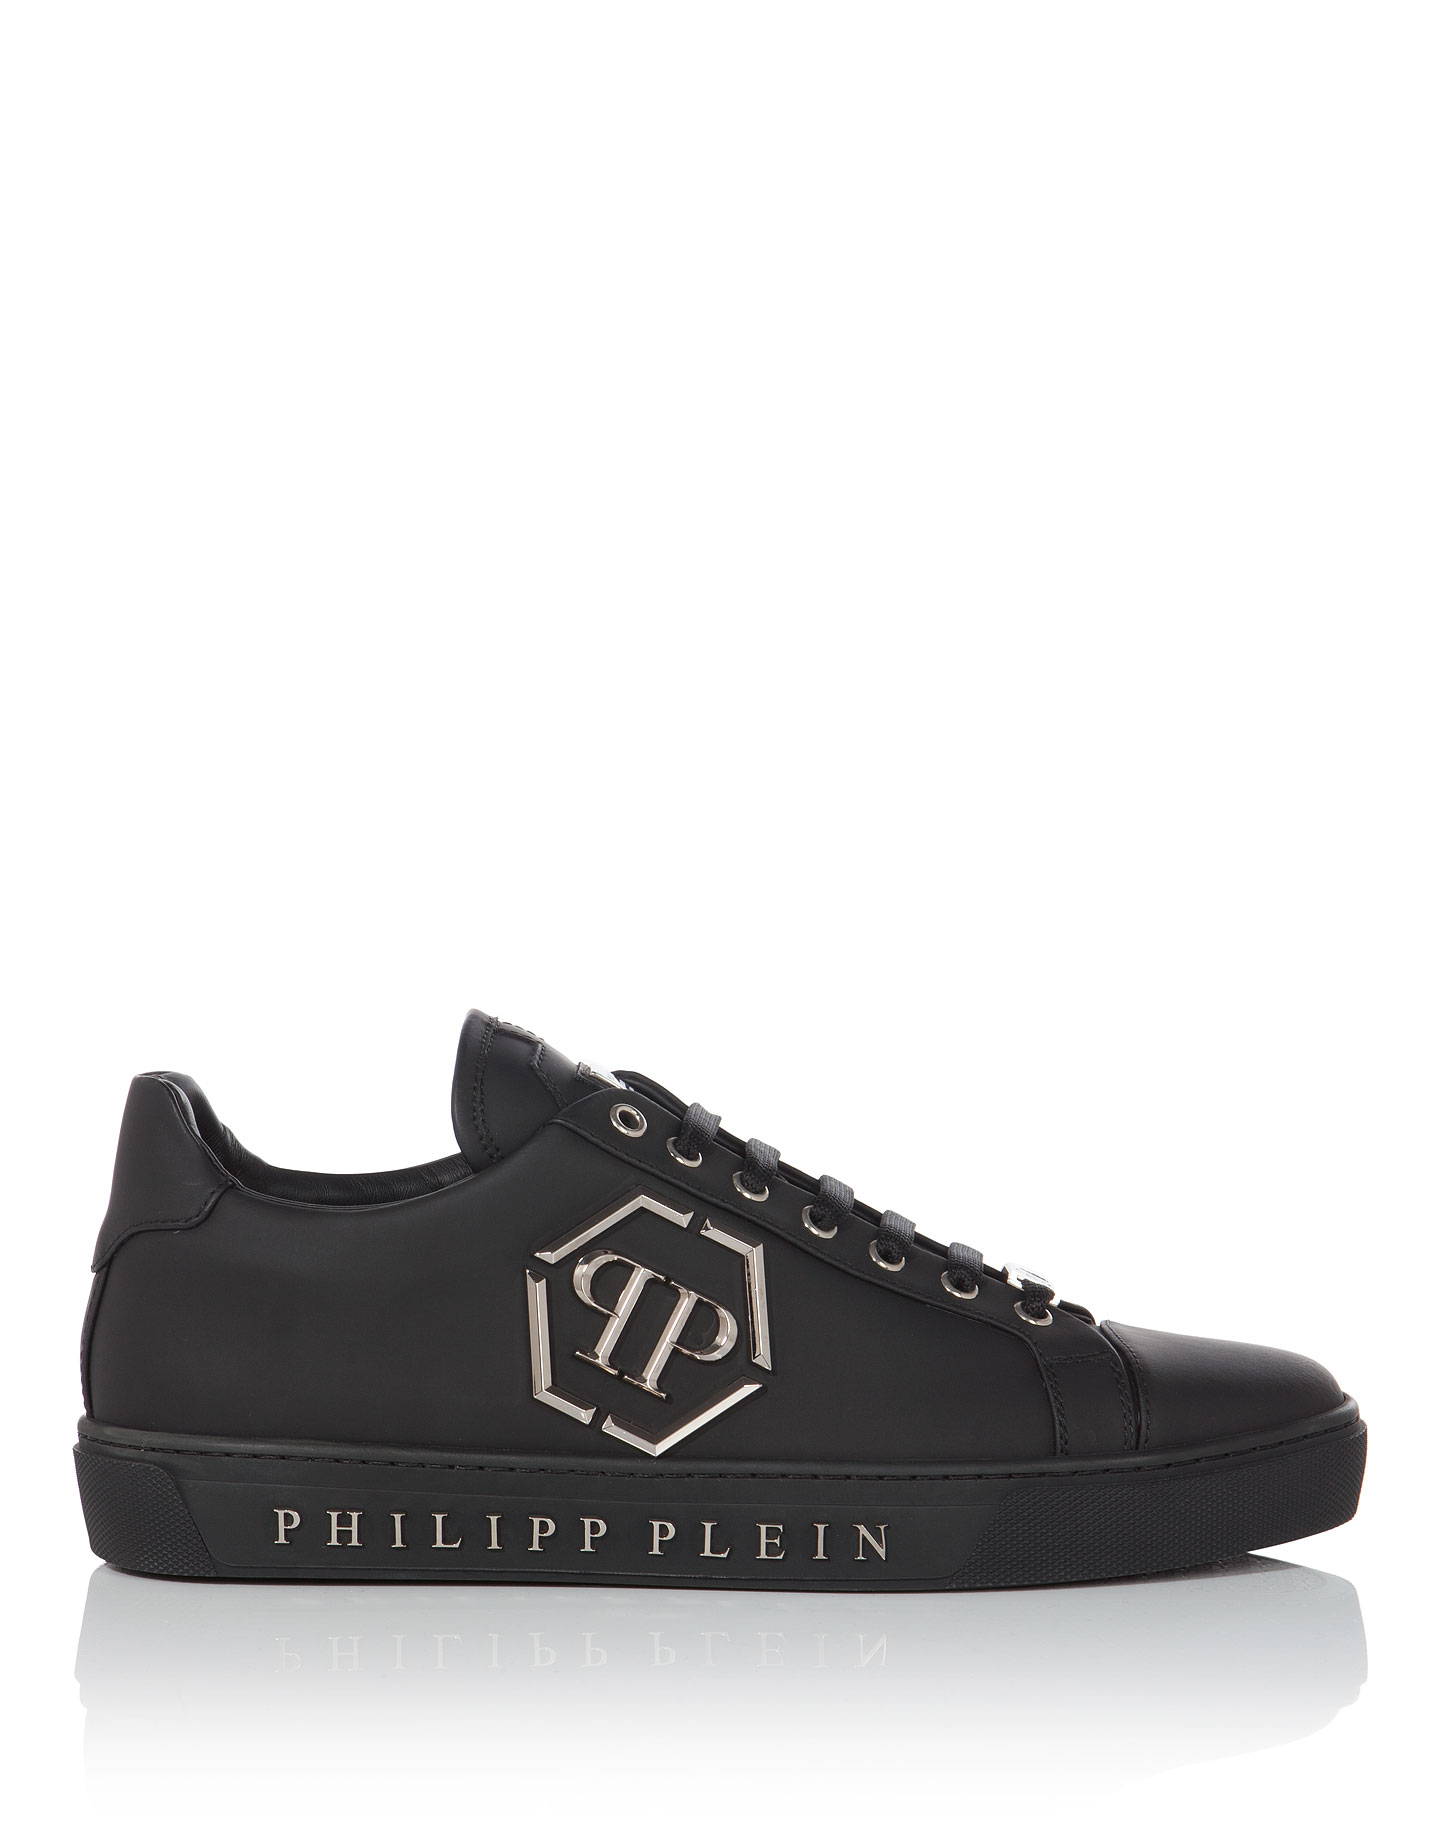 philip plein sneakers - 63% remise 